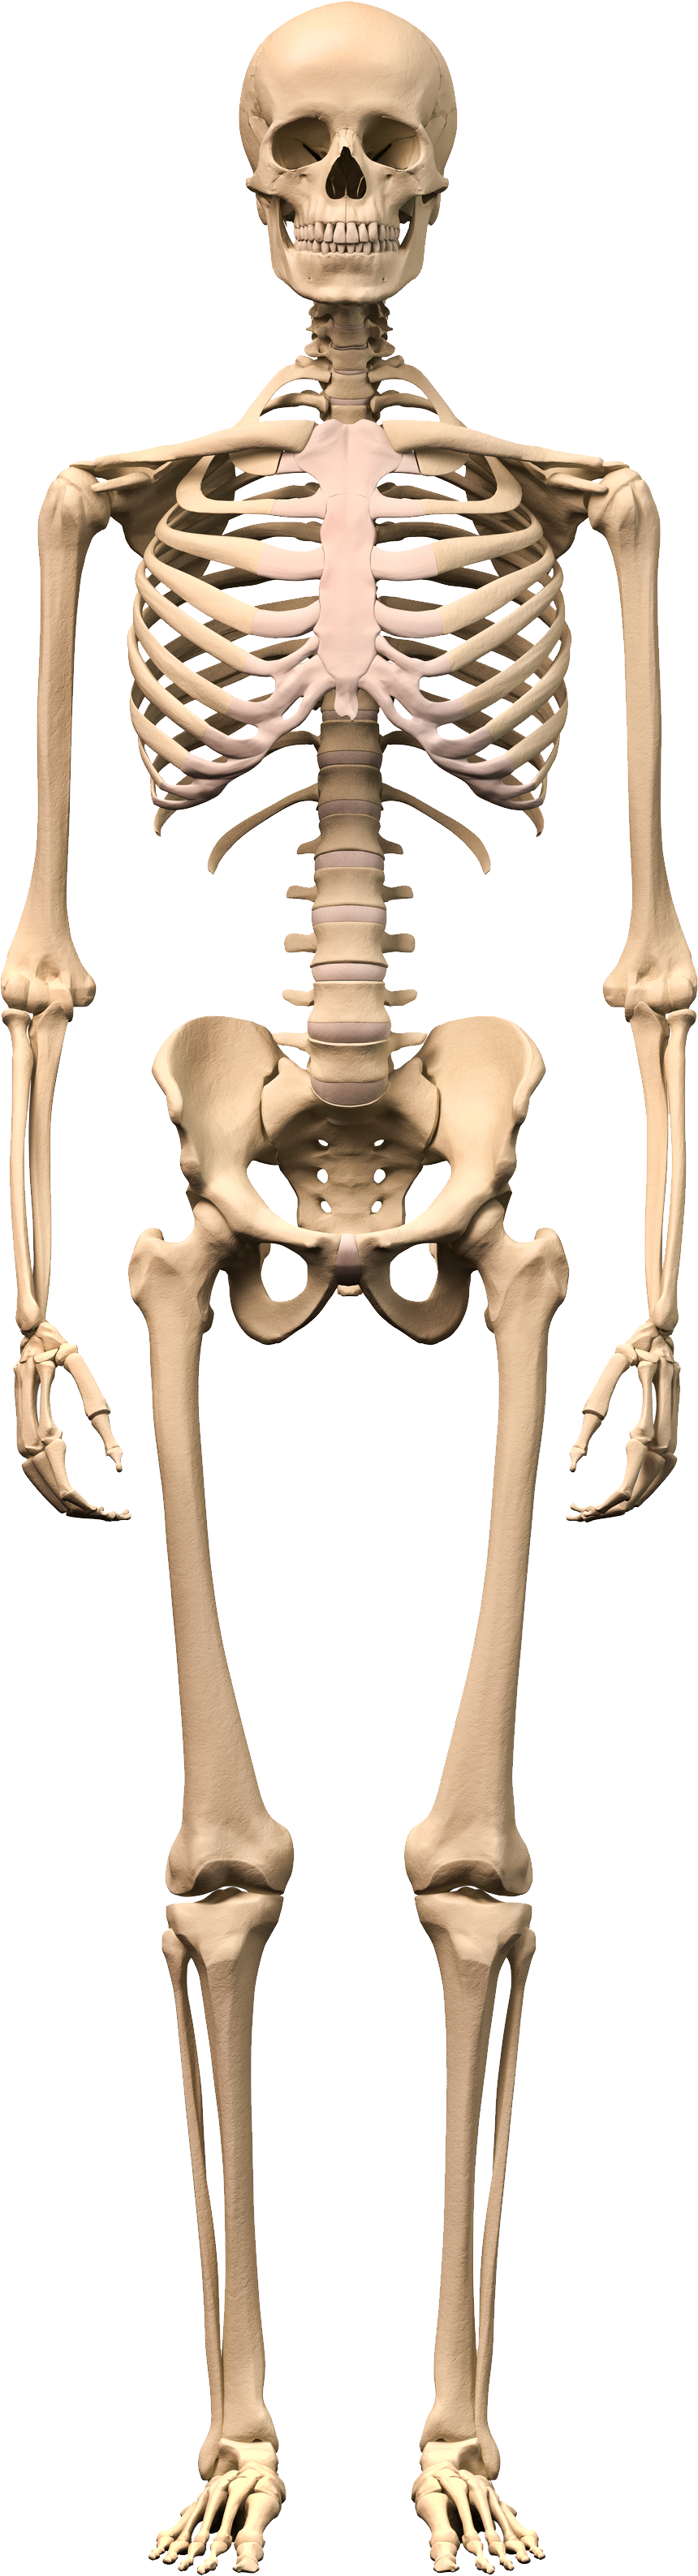 Skeletal Muscle Anatomy Human Skeleton Human Body Png Abdomen | Images ...